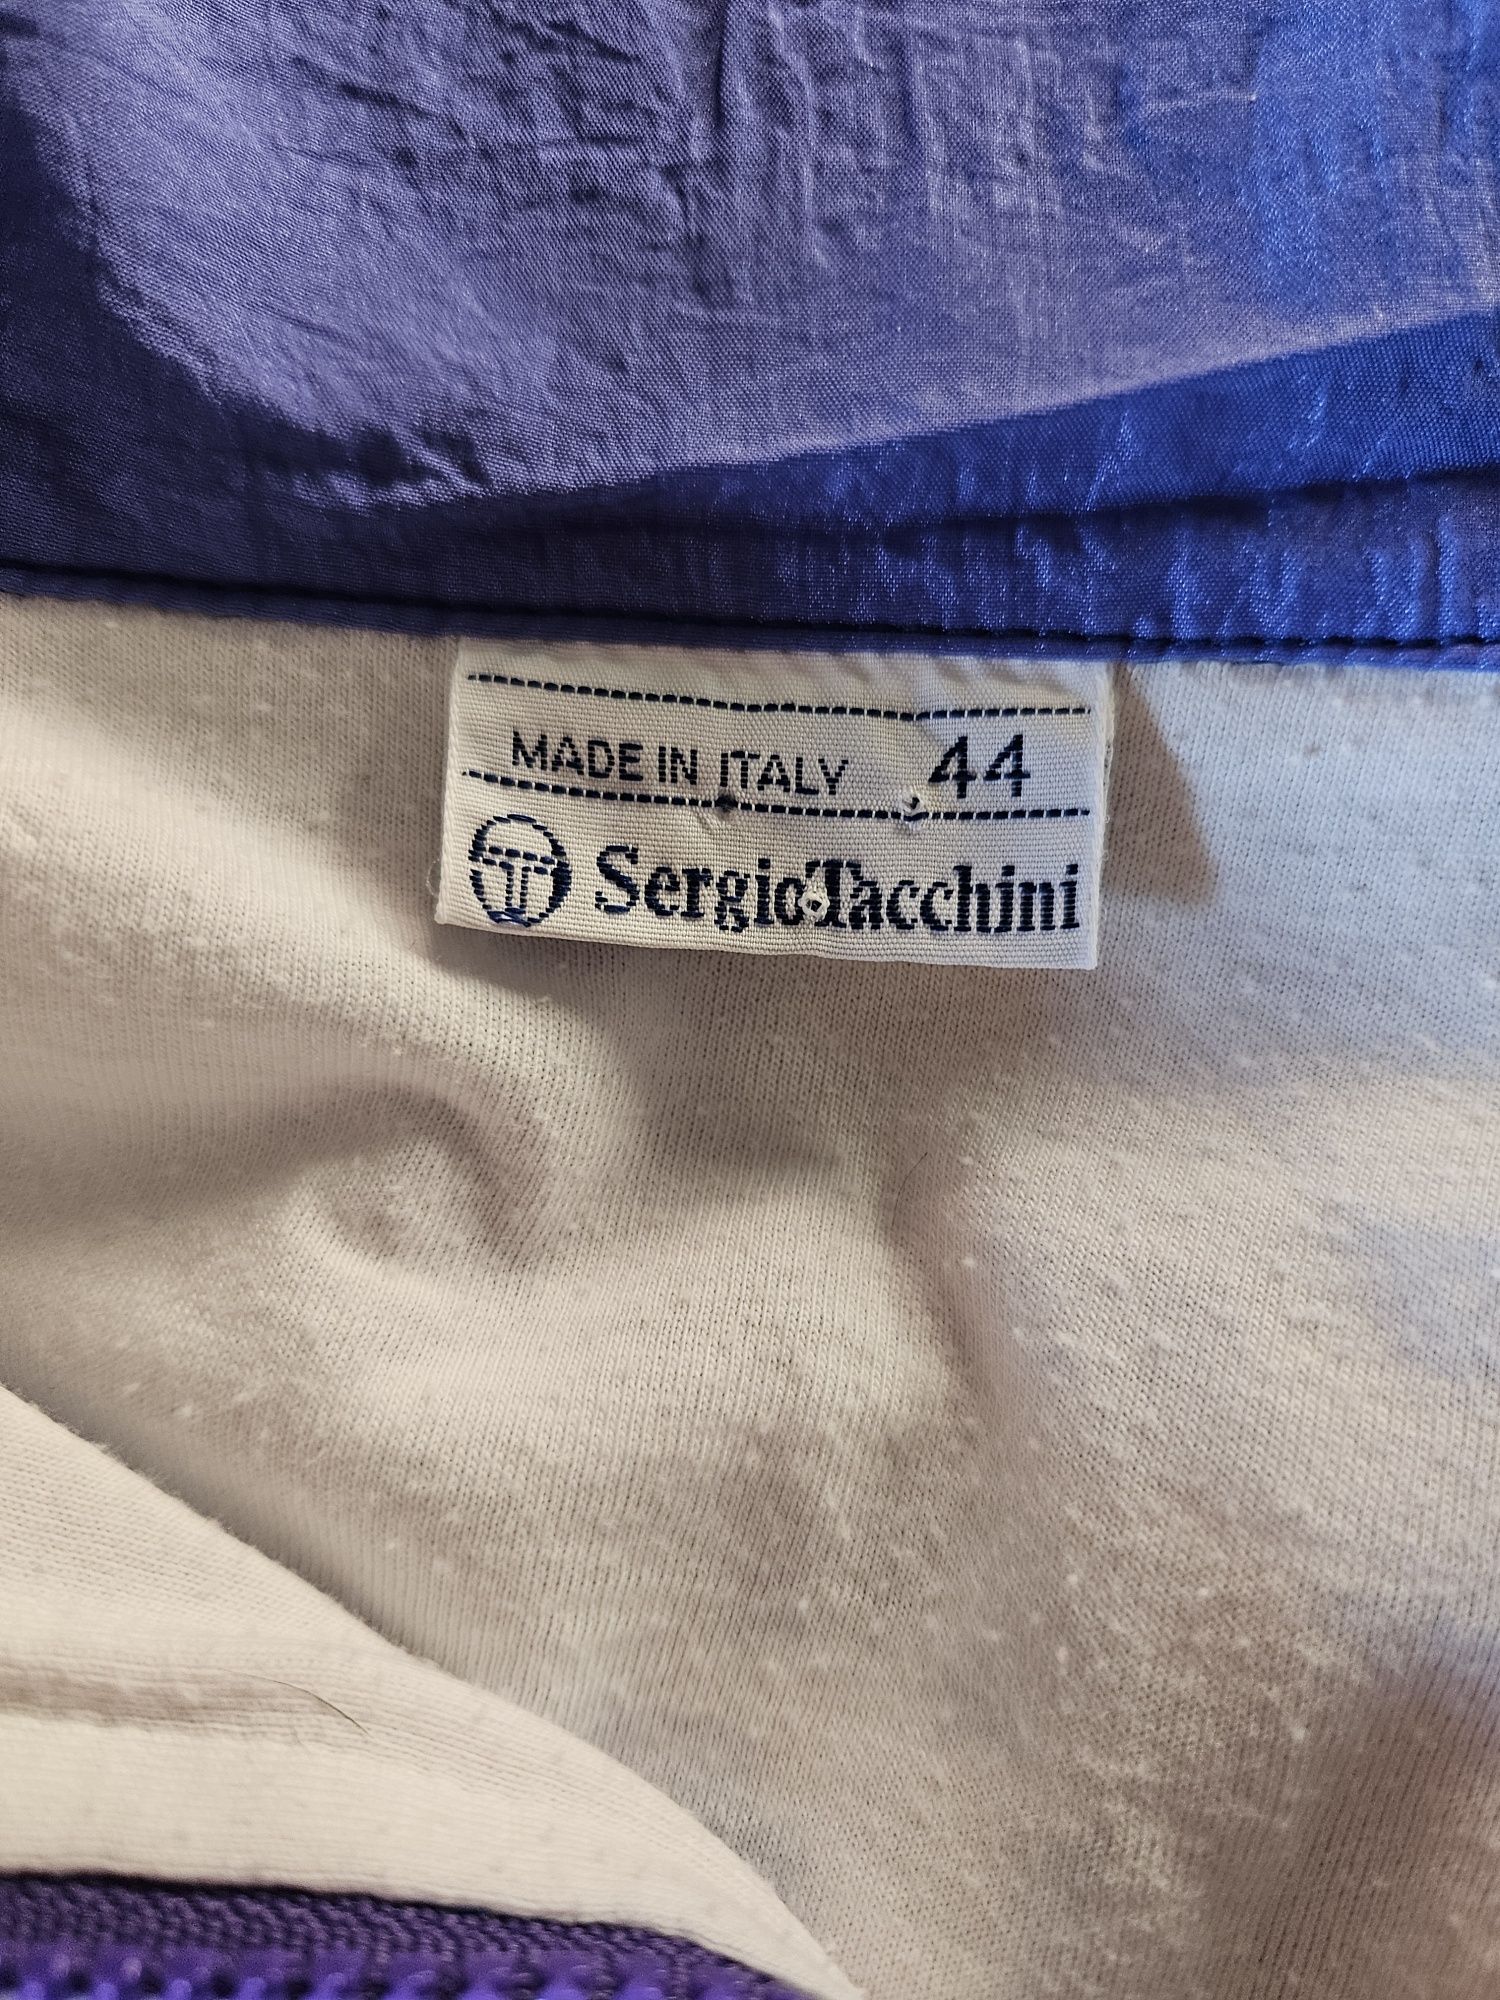 Bluza Sergio Tacchini, nu Nike, Adidas, Jordan, Levi's, Zara, Gucci